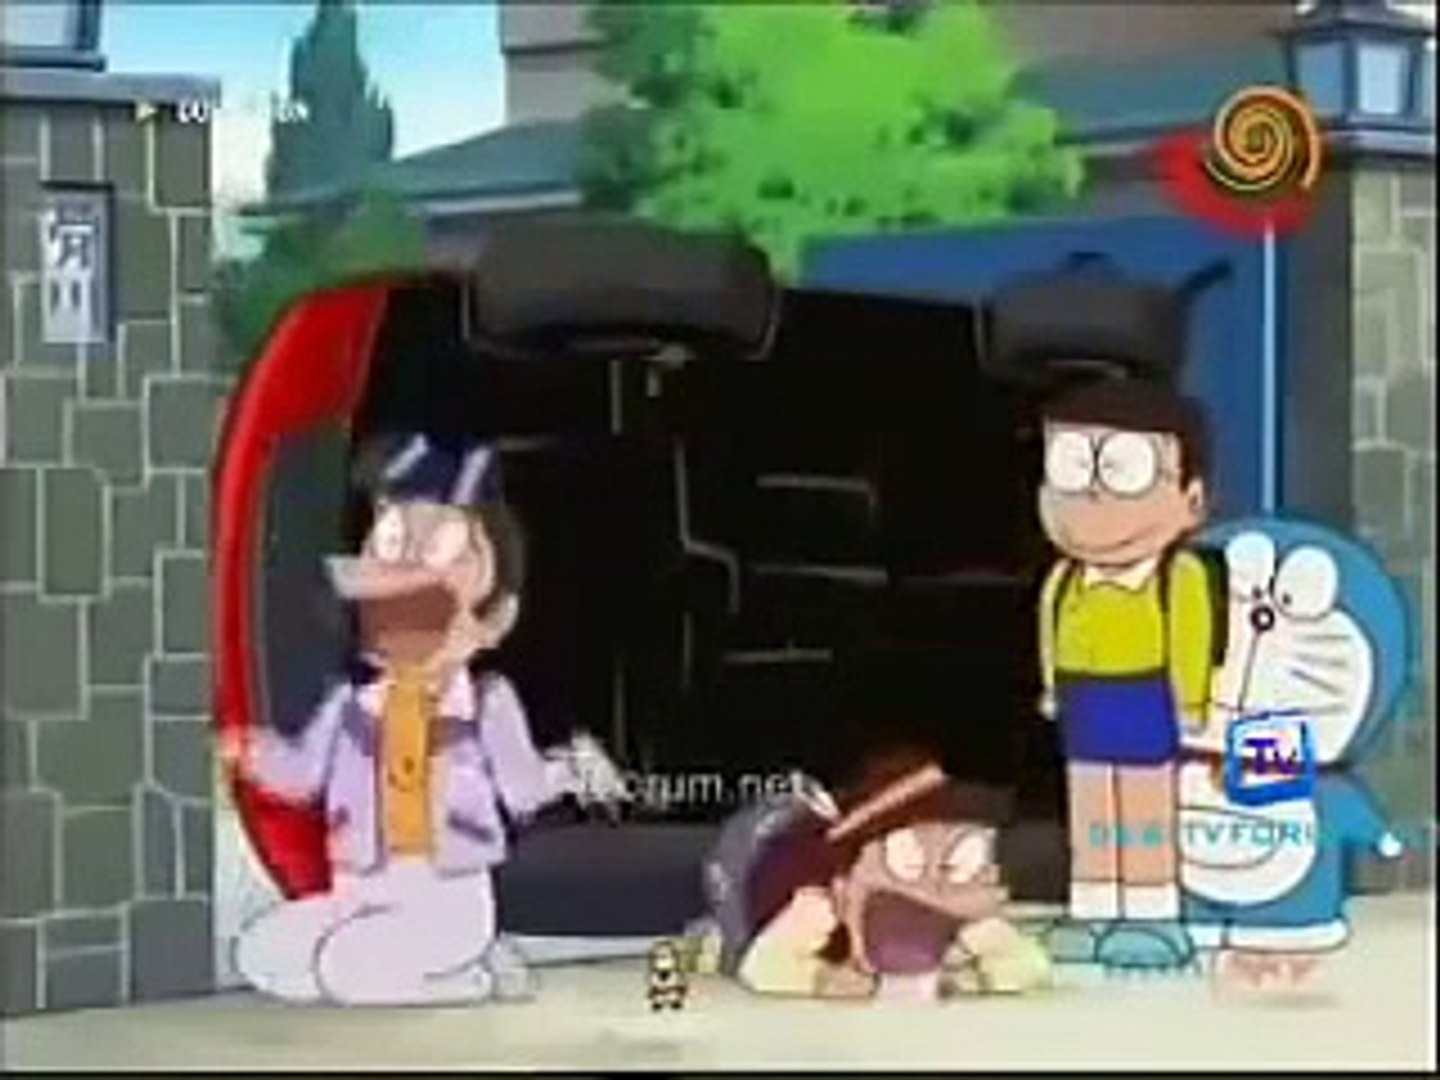 Doraemon Hindi Urdu 6 7 Video youtube and Dailymotion - Dailymotion Video